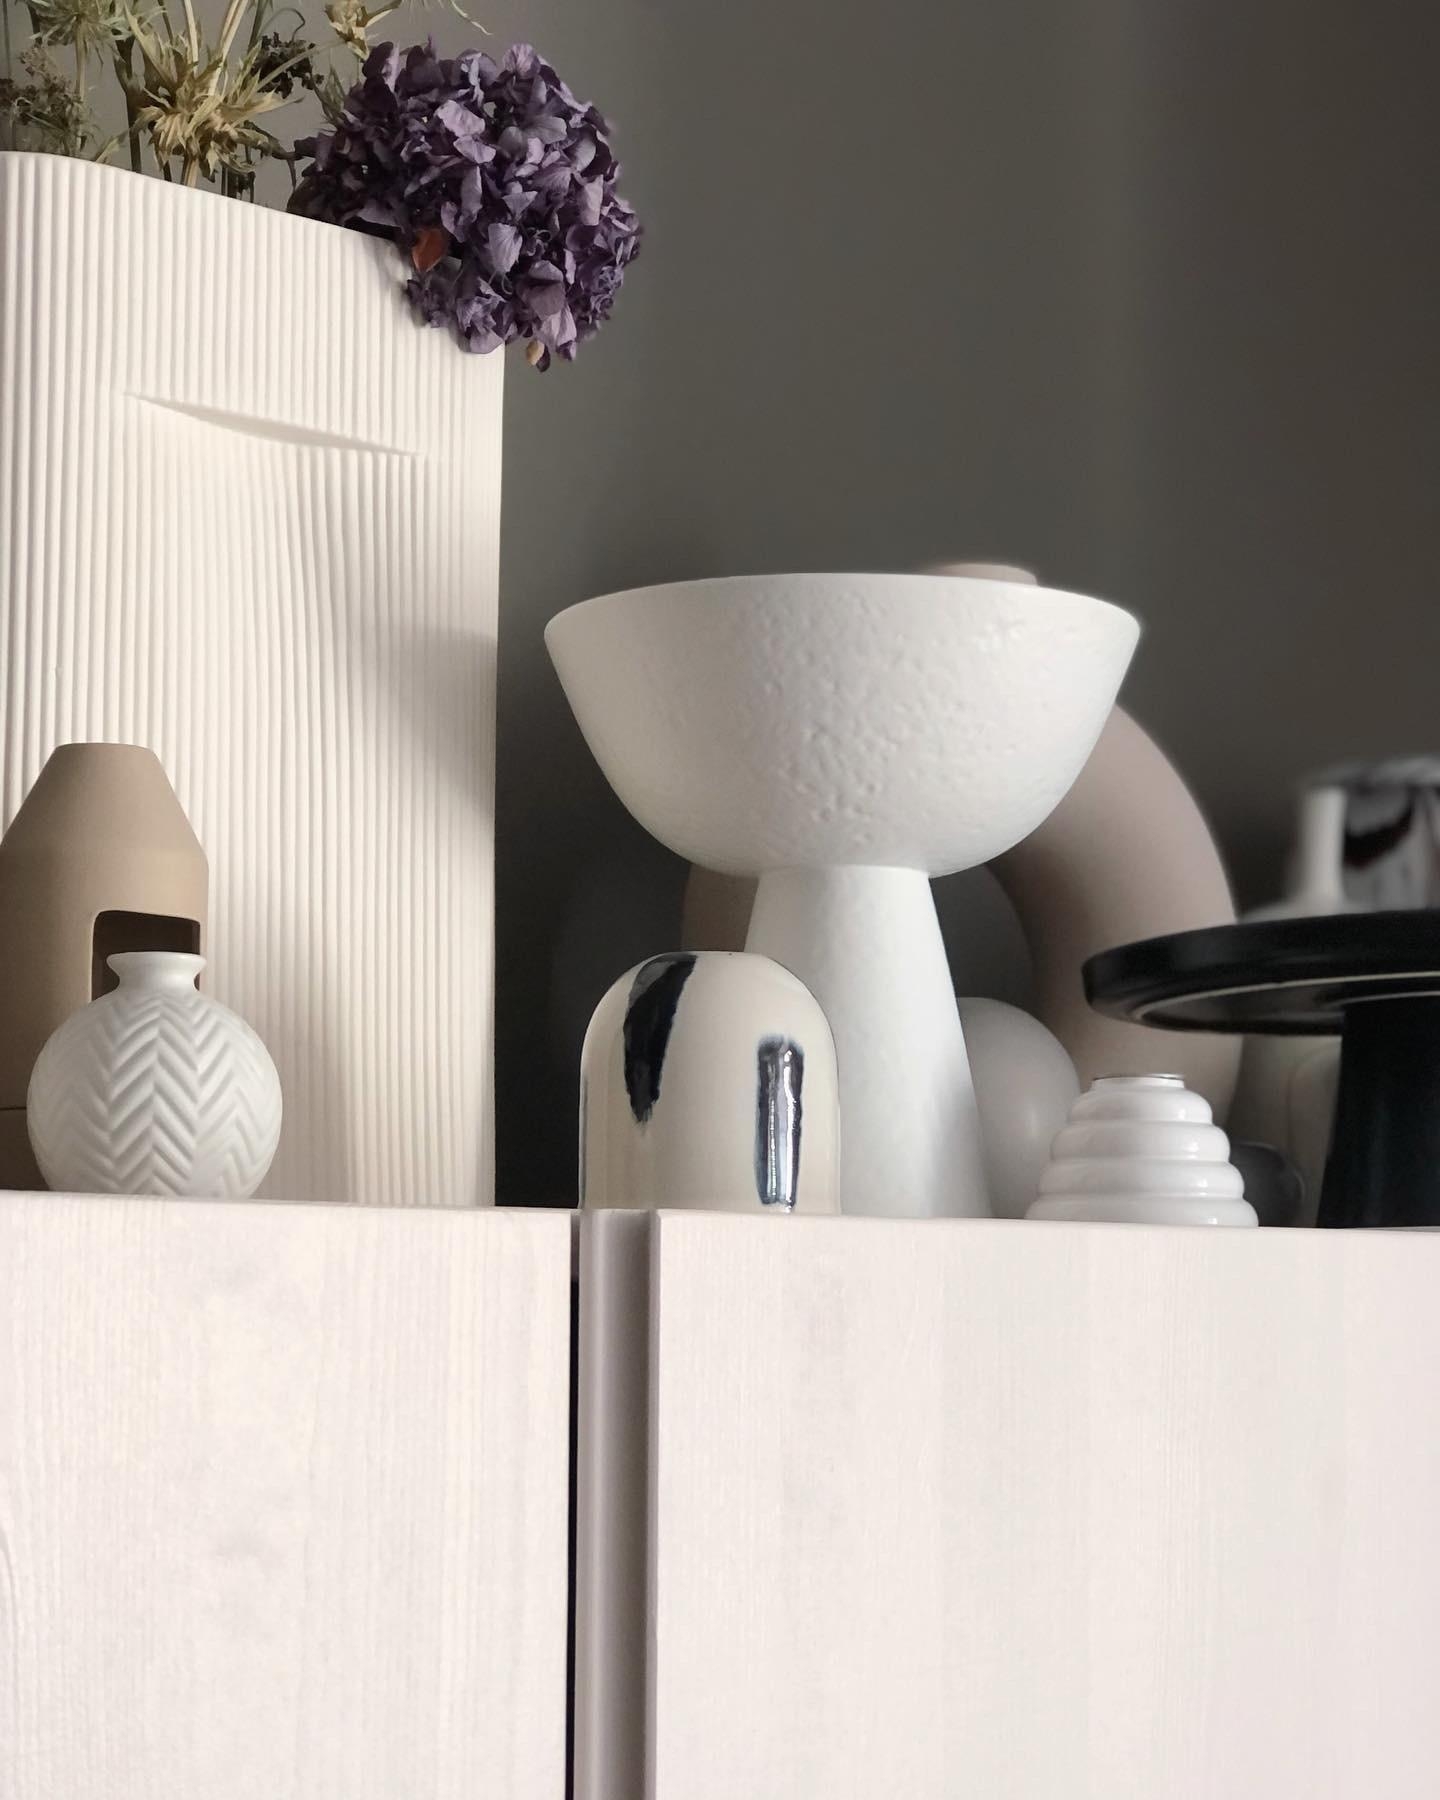 #vase #keramik #accessoires #deko #dekoration #sideboard #ikeaivar #home #wohnzimmer #Livingchallenge #interior